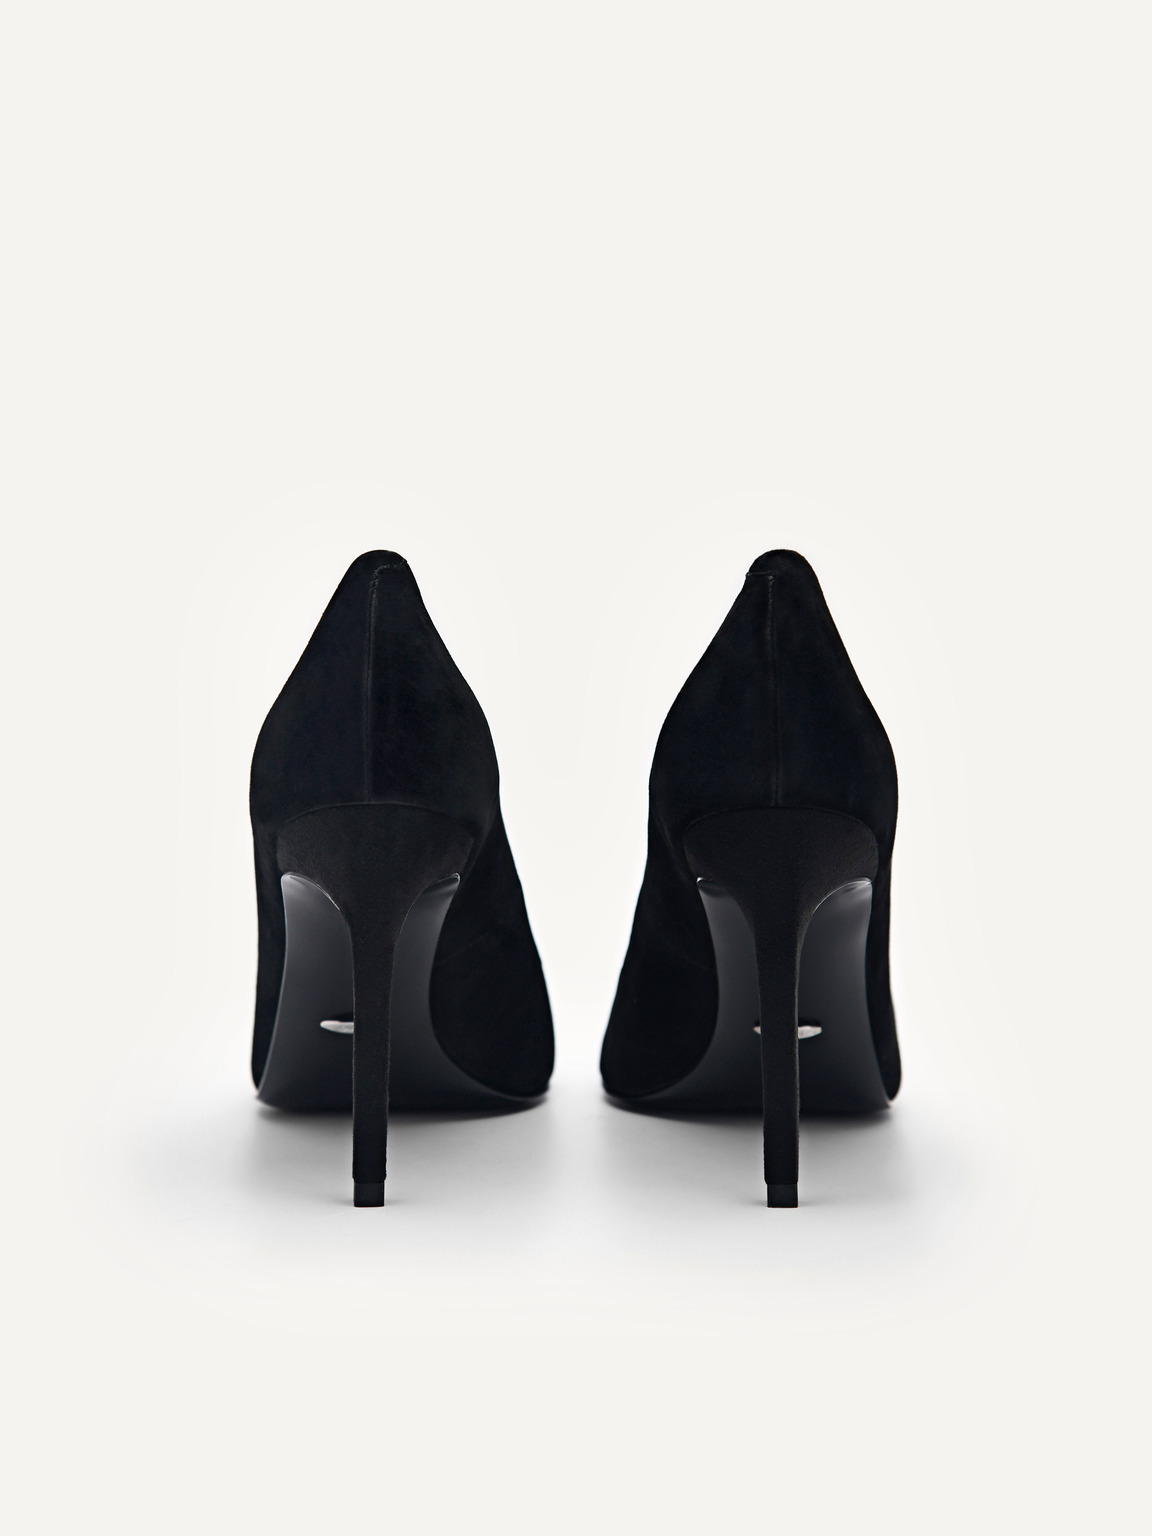 PEDRO工作室Ursula皮革高跟鞋, 黑色